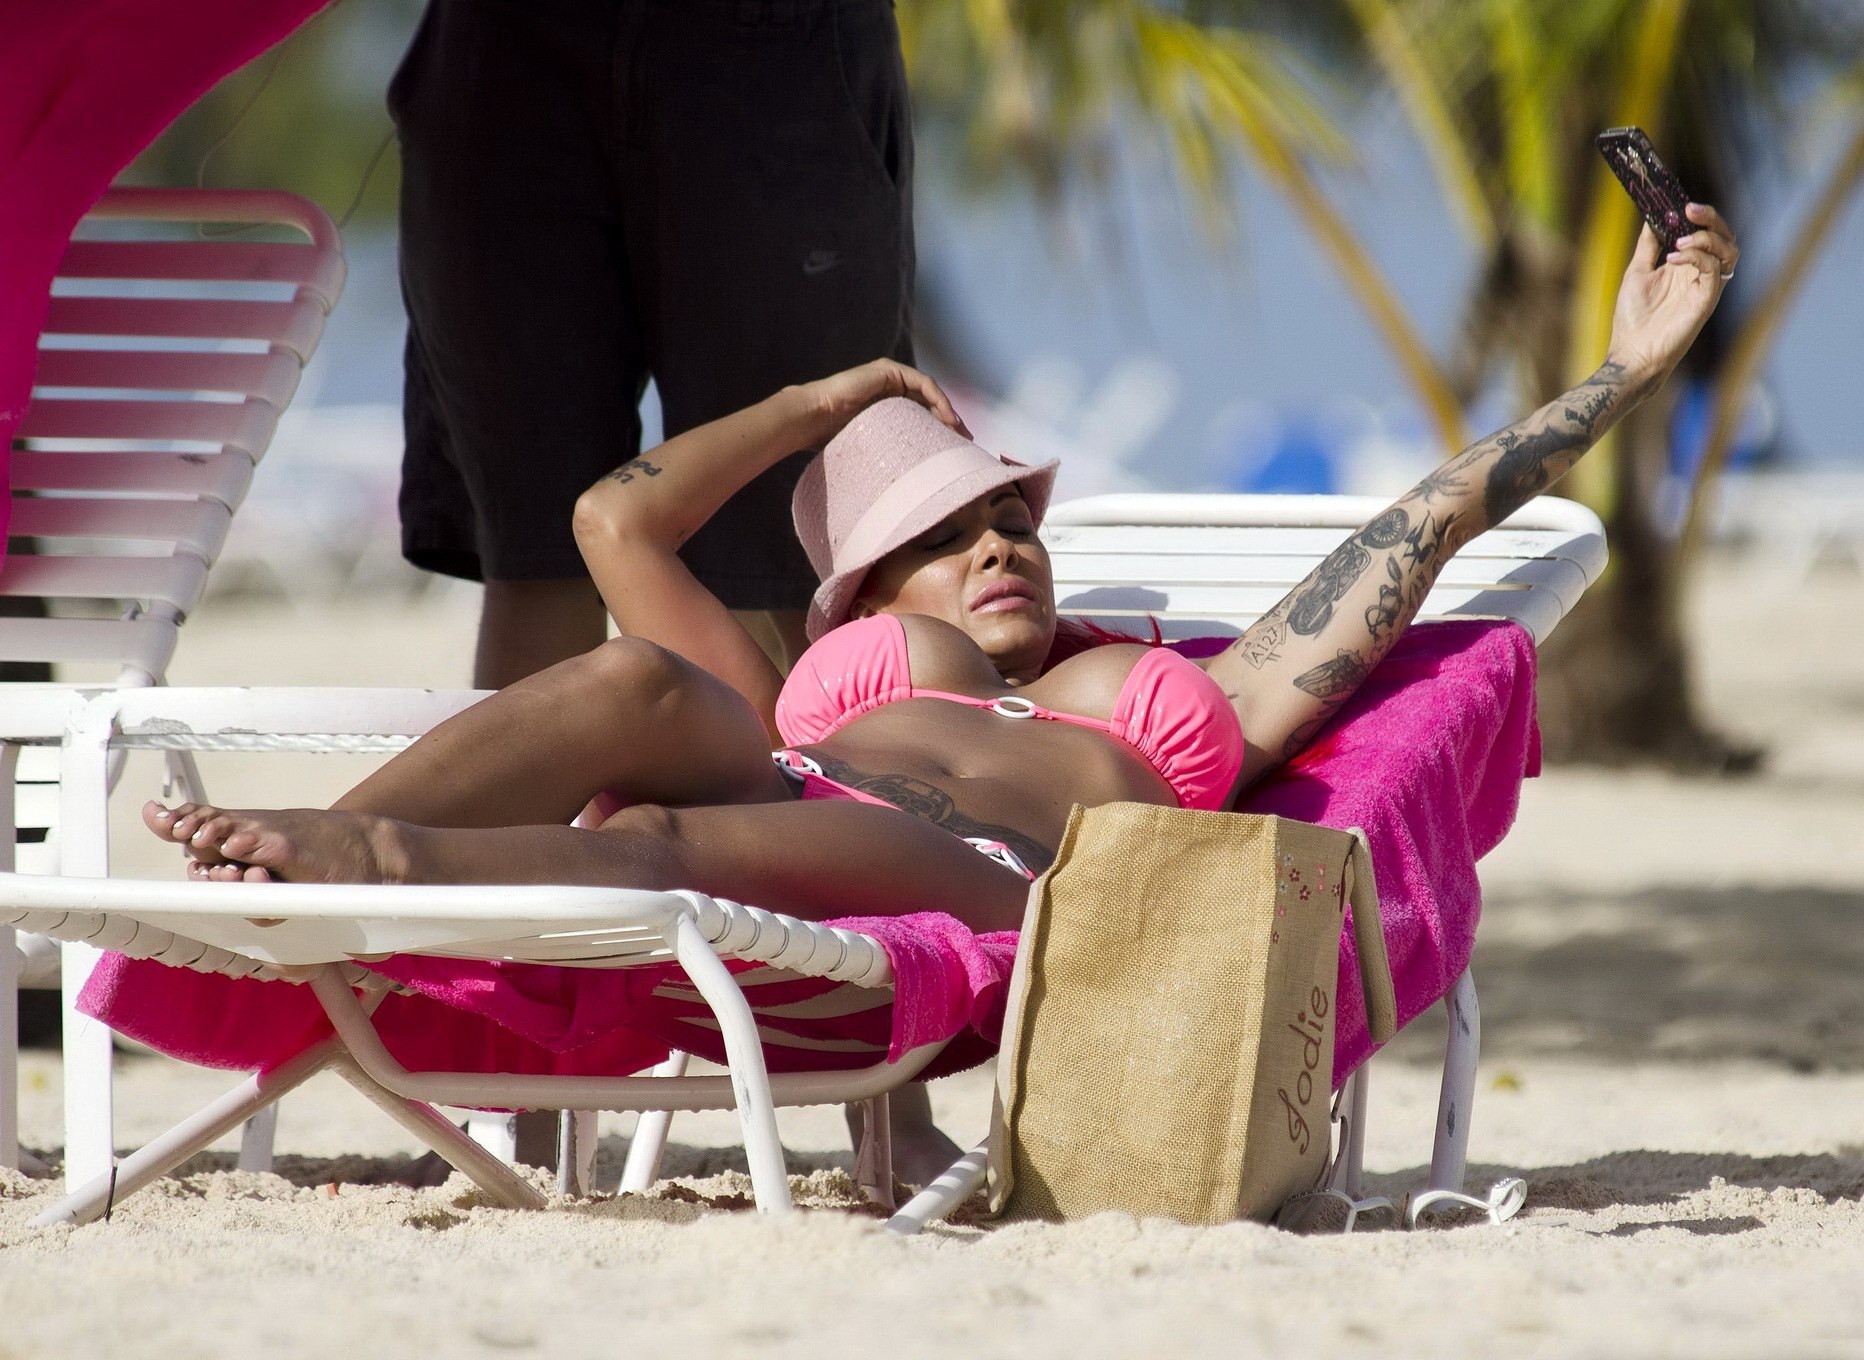 Busty Jodie Marsh wearing a skimpy pink bikini on a beach in Barbados #75245359